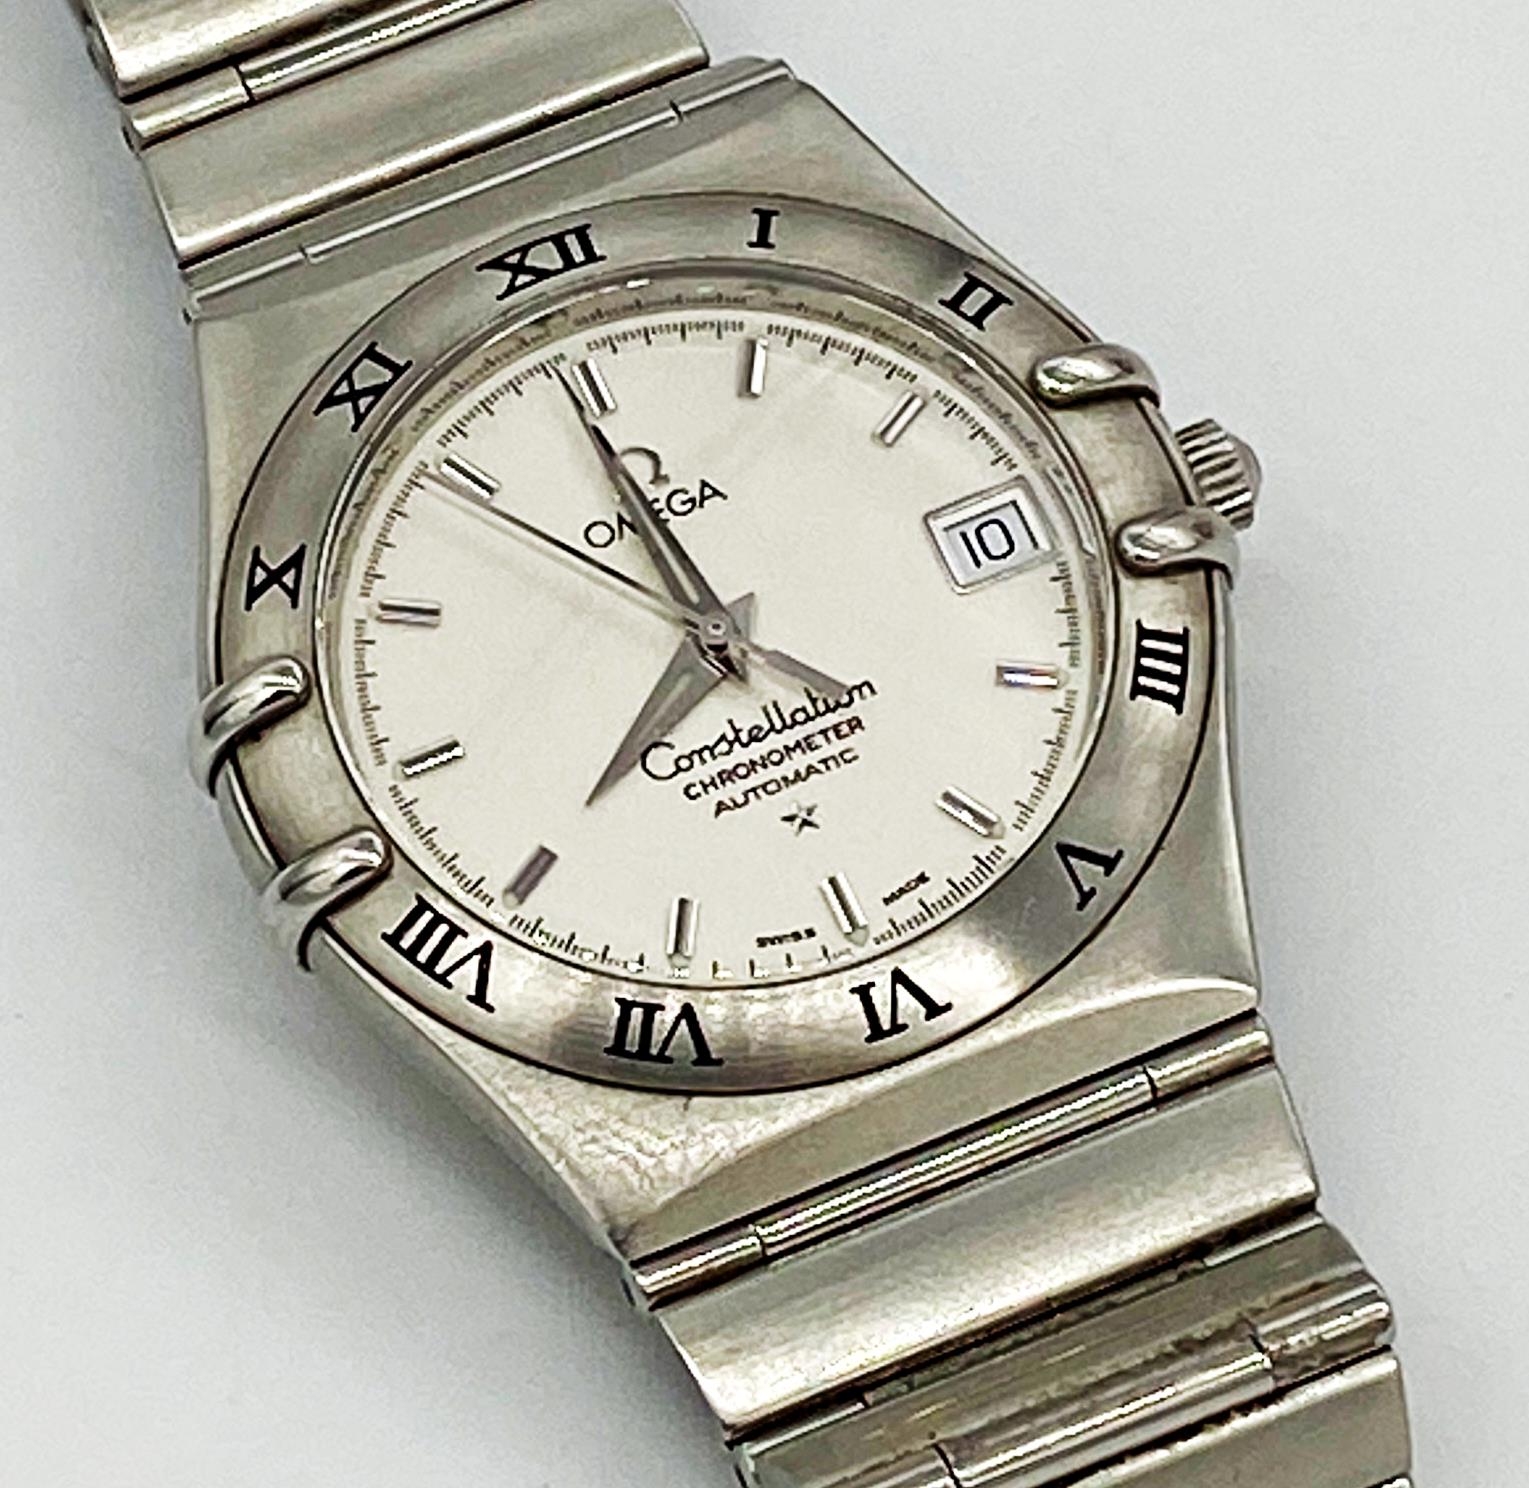 Omega Constellation Chronometer automatic stainless steel gentleman's bracelet watch, ref. 15023000,